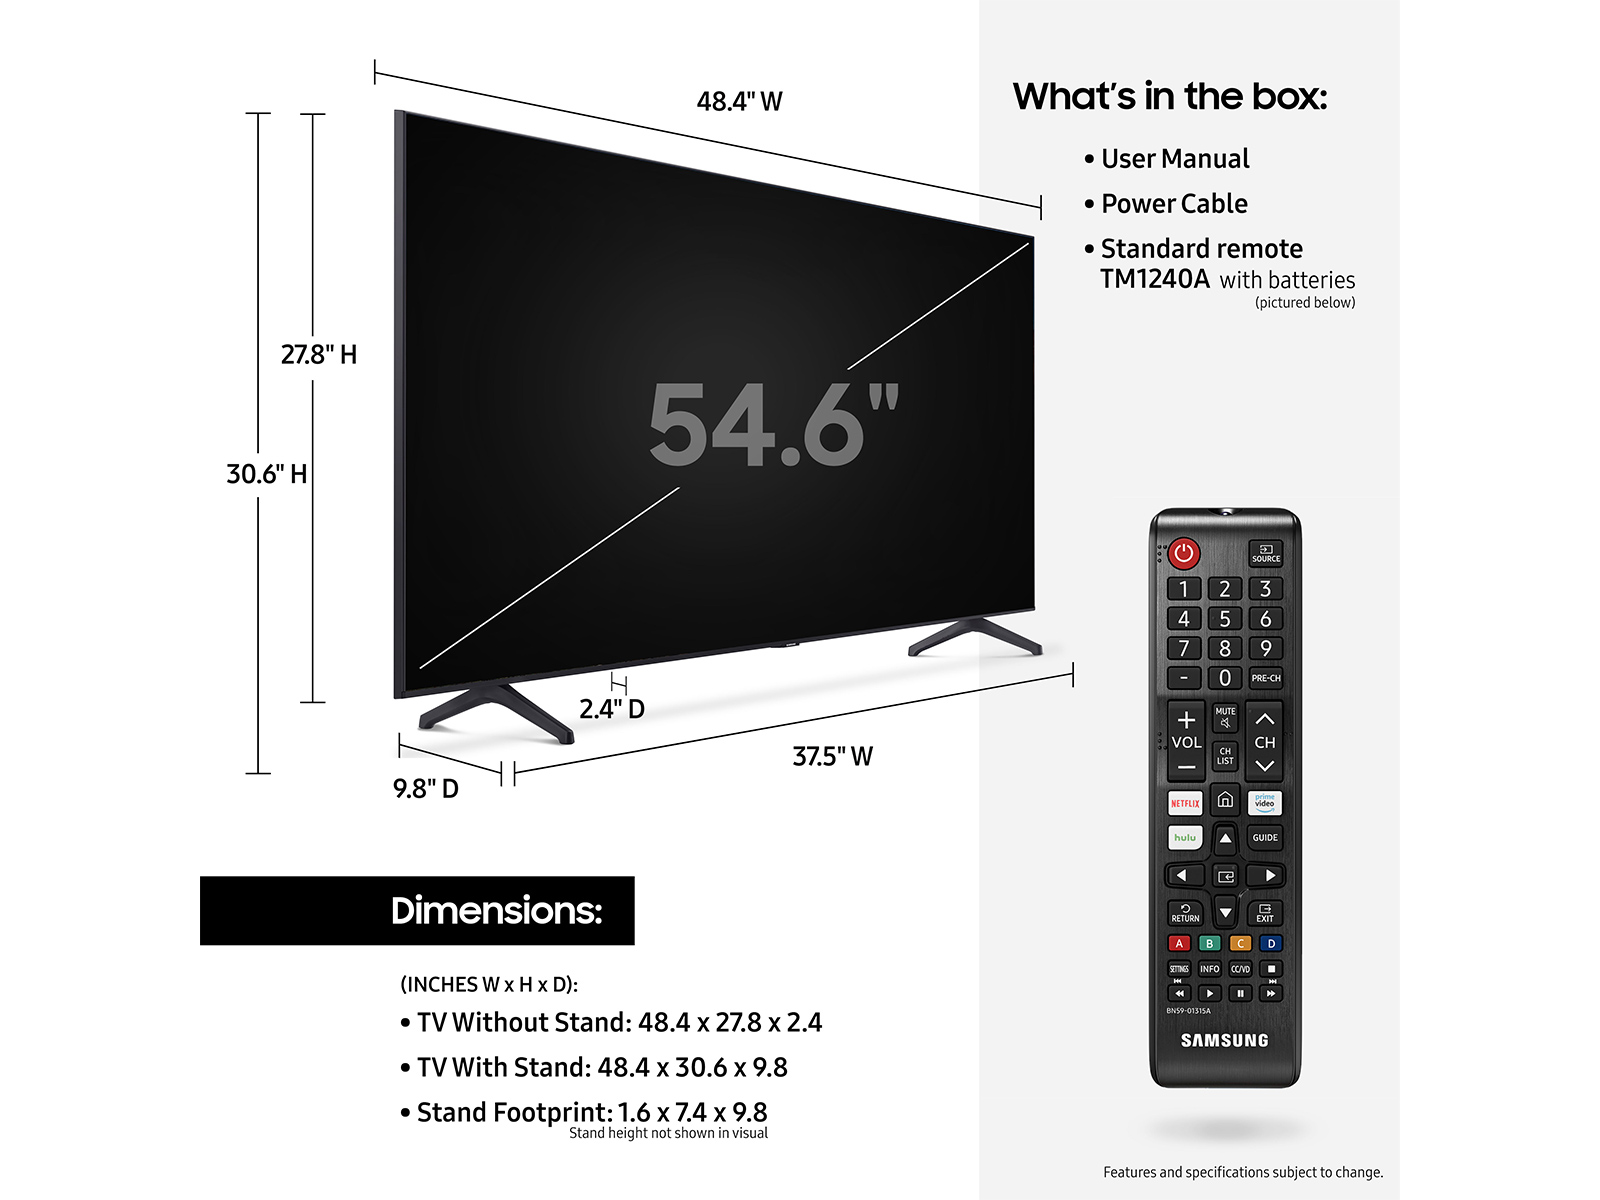 Samsung 55-inch TU-7000 Series Class Smart TV | Crystal UHD - 4K HDR - with  Alexa Built-in | UN55TU7000FXZA, 2020 Model